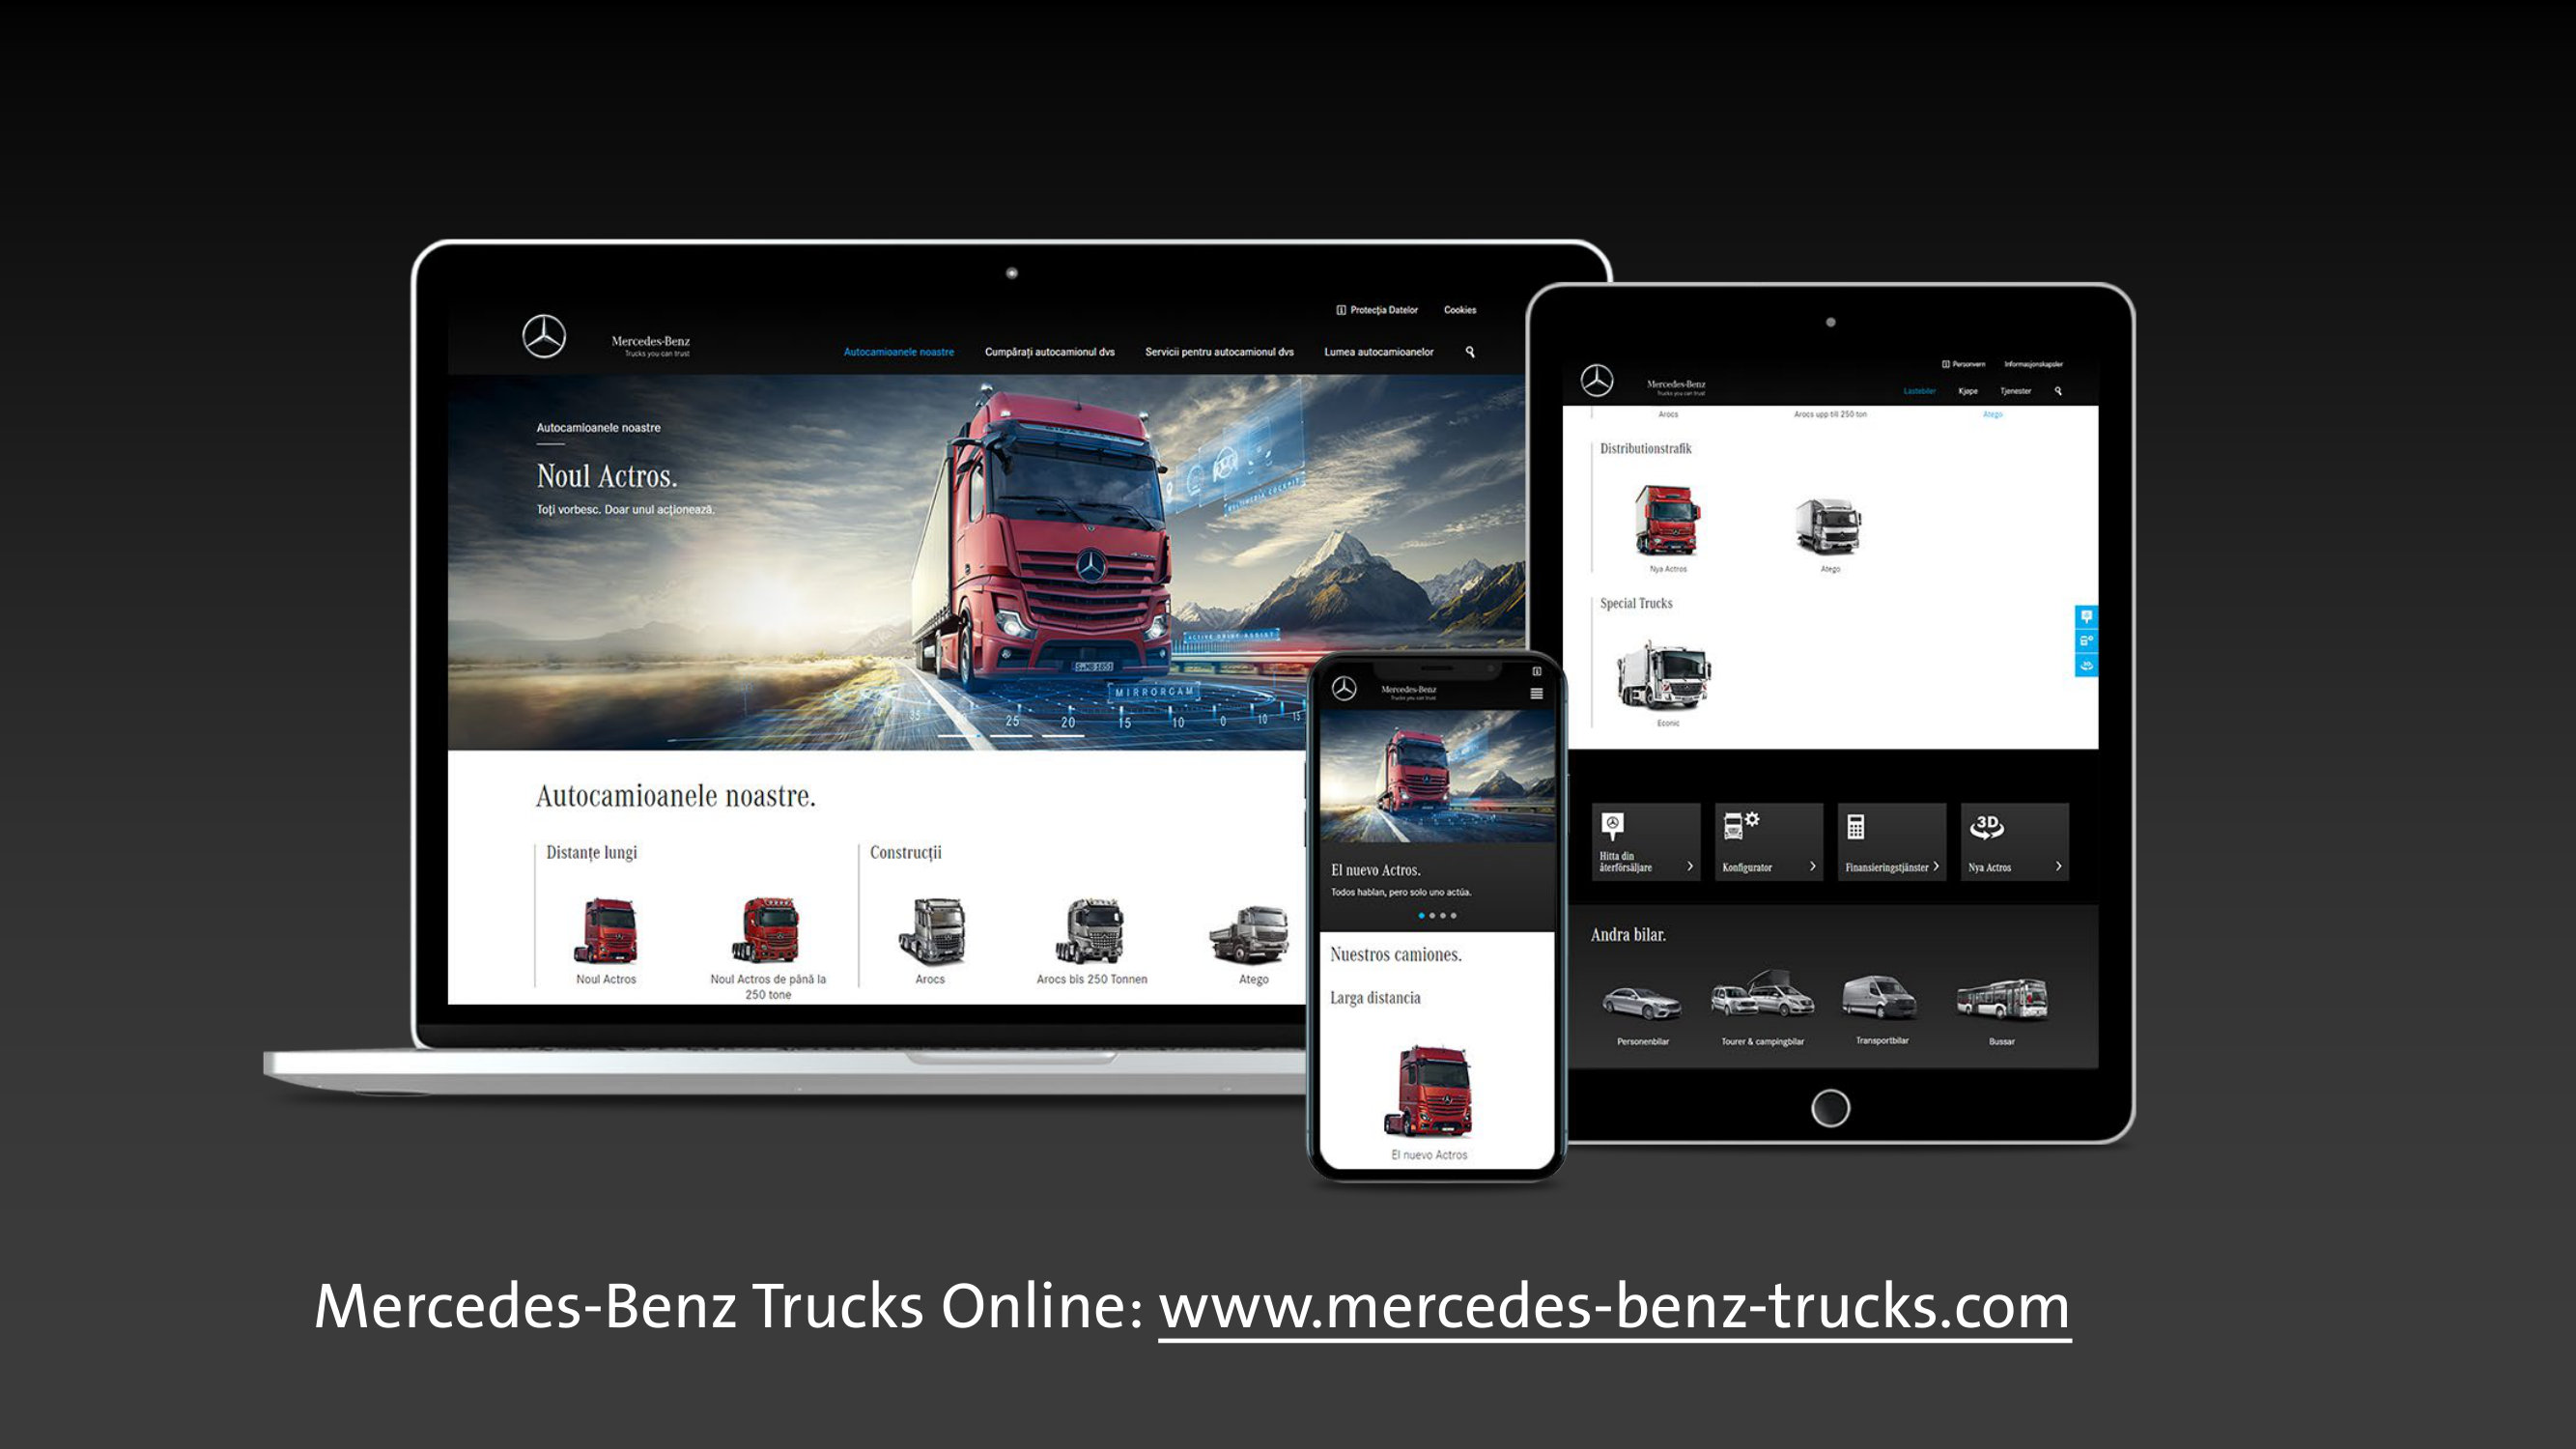 MBTO (Mercedes-Benz Trucks Online)